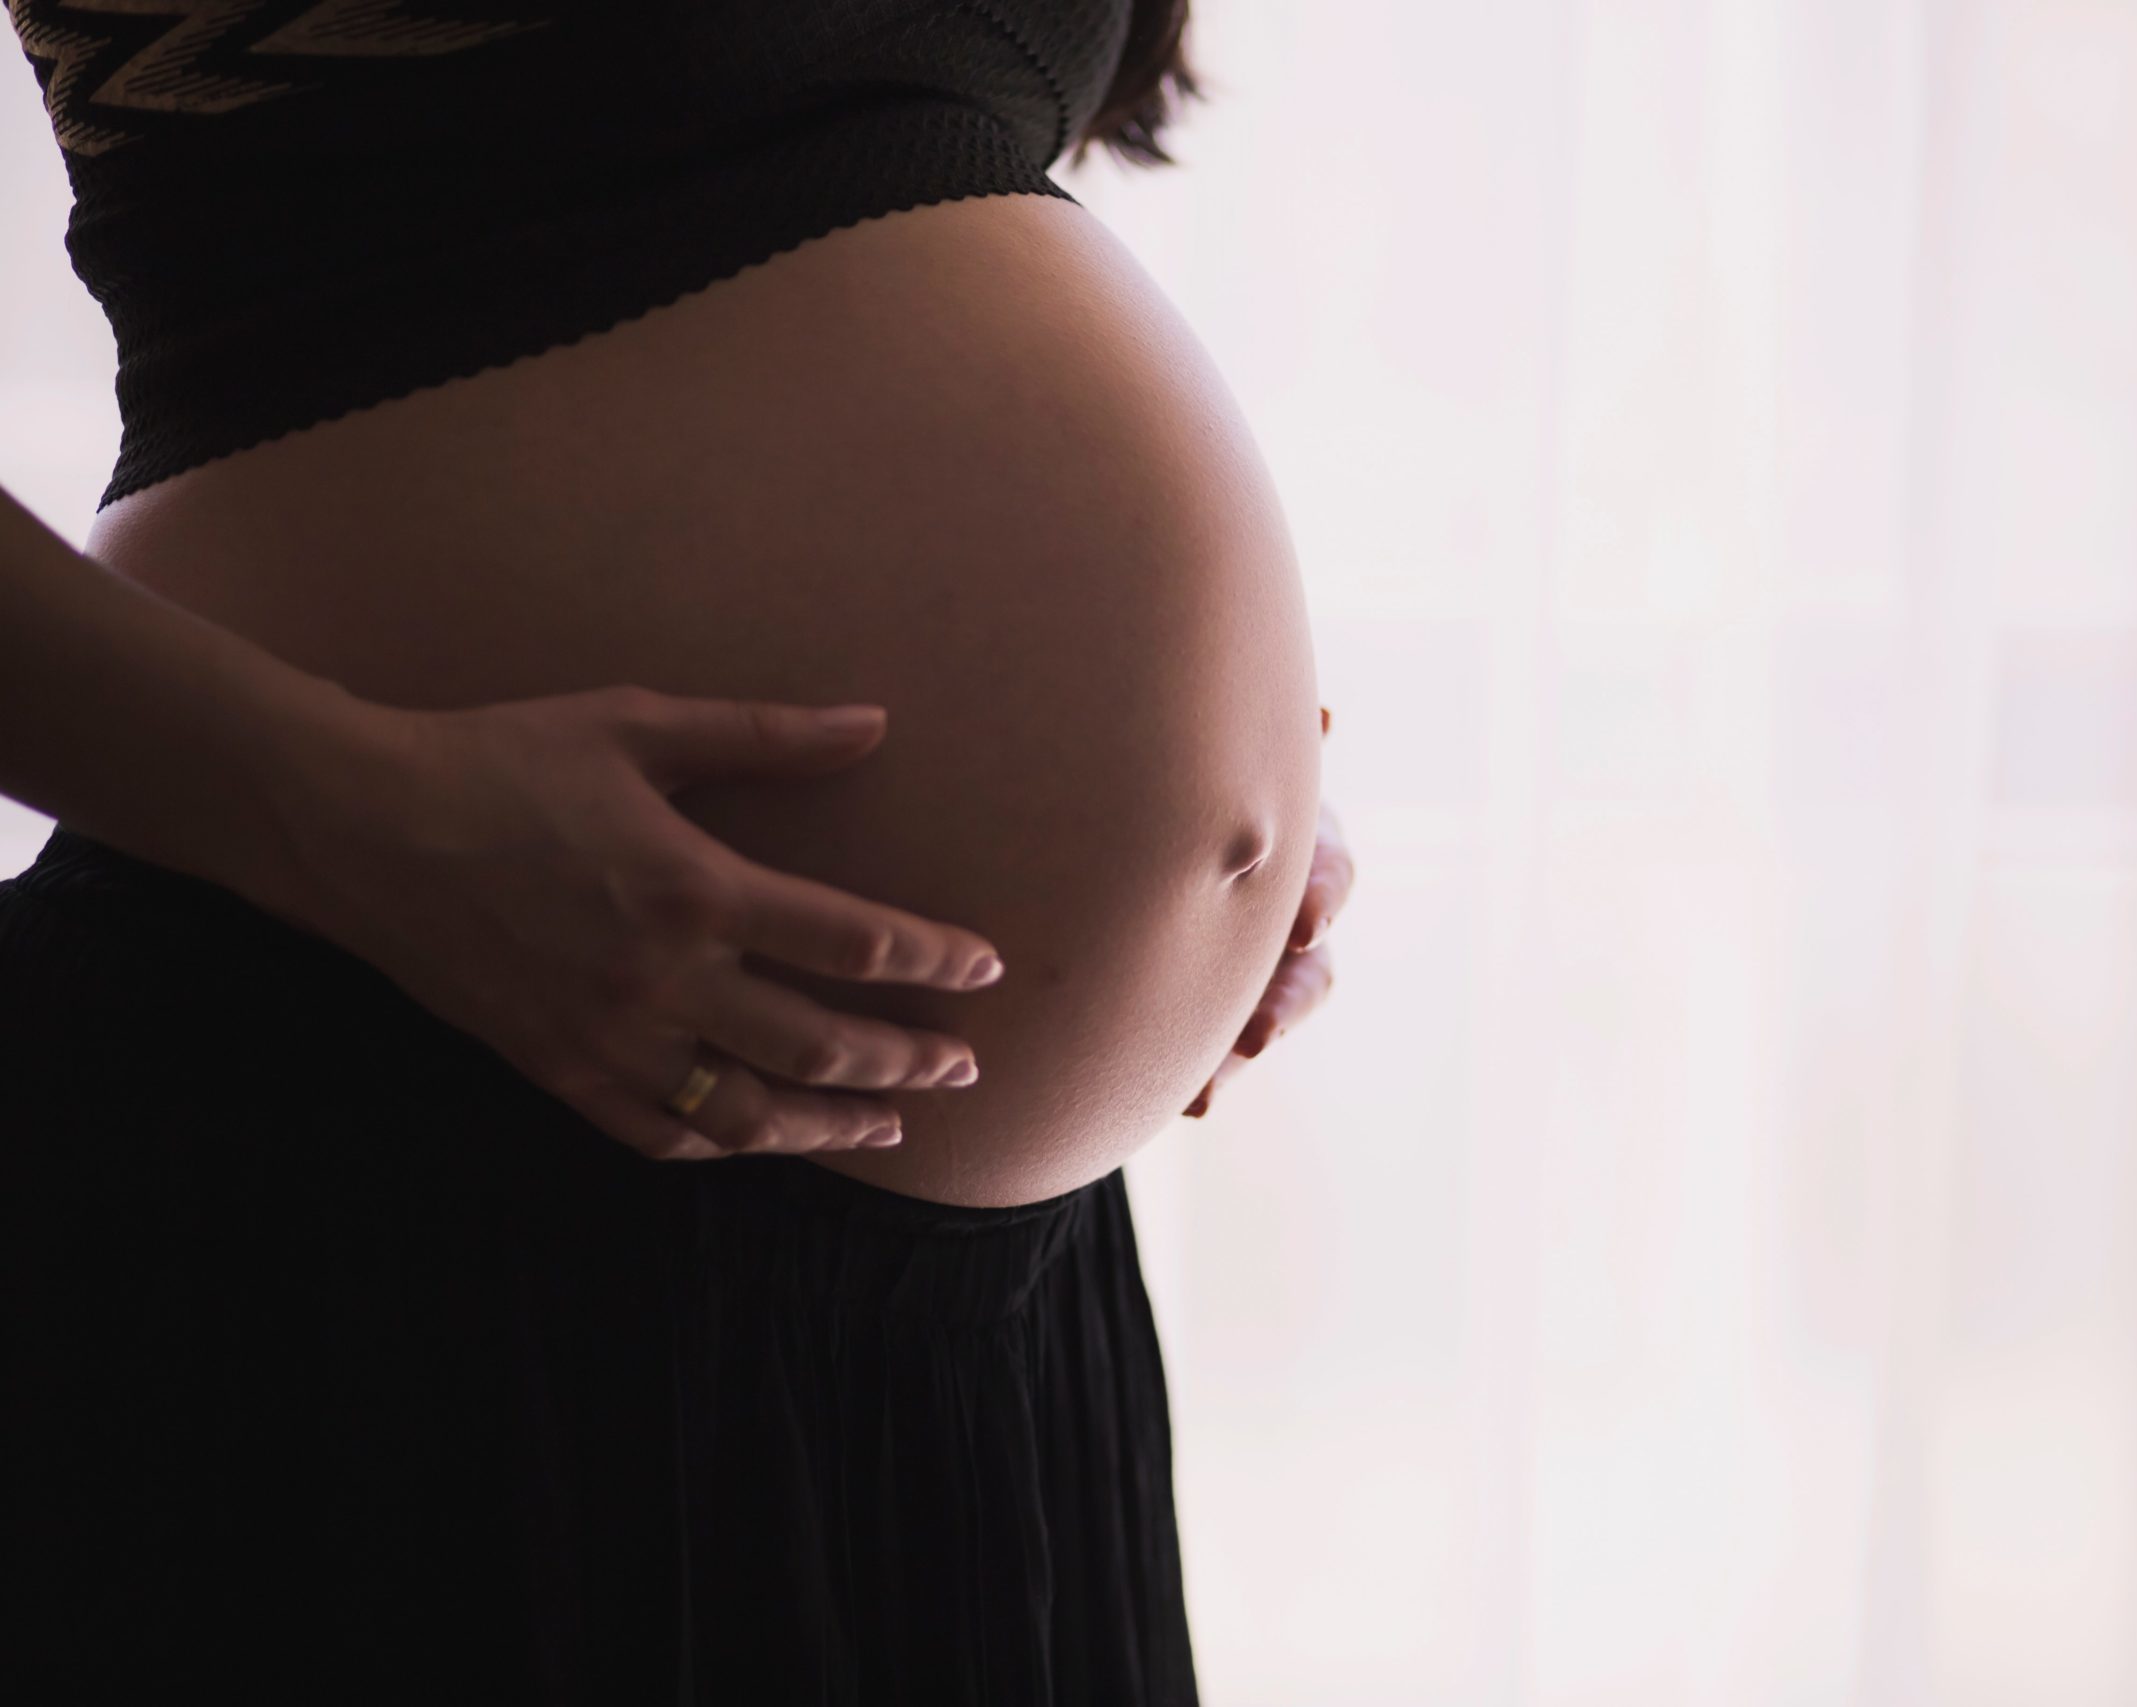 Pregnancy, The Moster Law Firm In Vitro Fertilization, Gestation, Surrogacy, Law, Pregnant